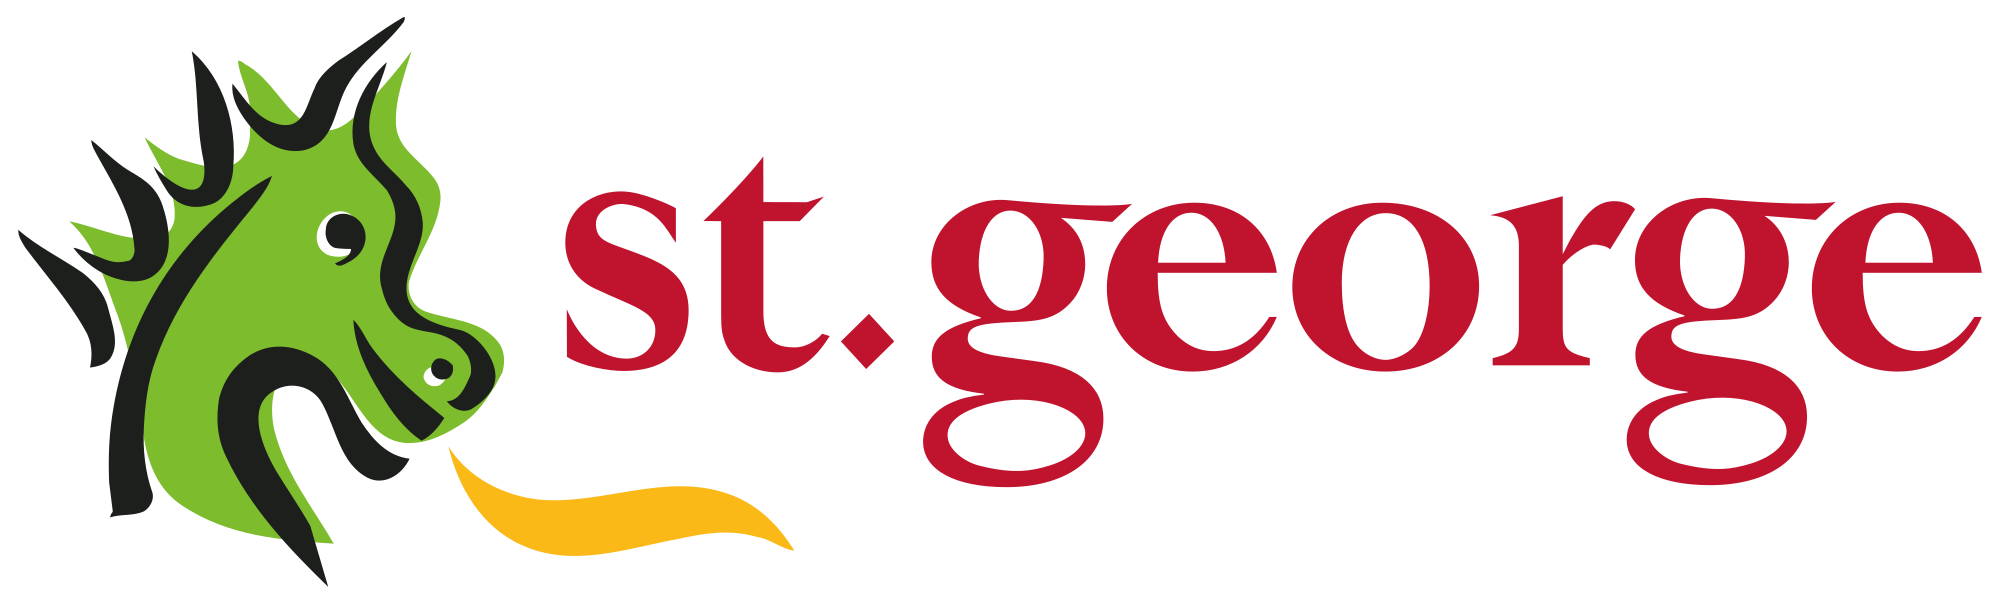 St.George Brand Logo